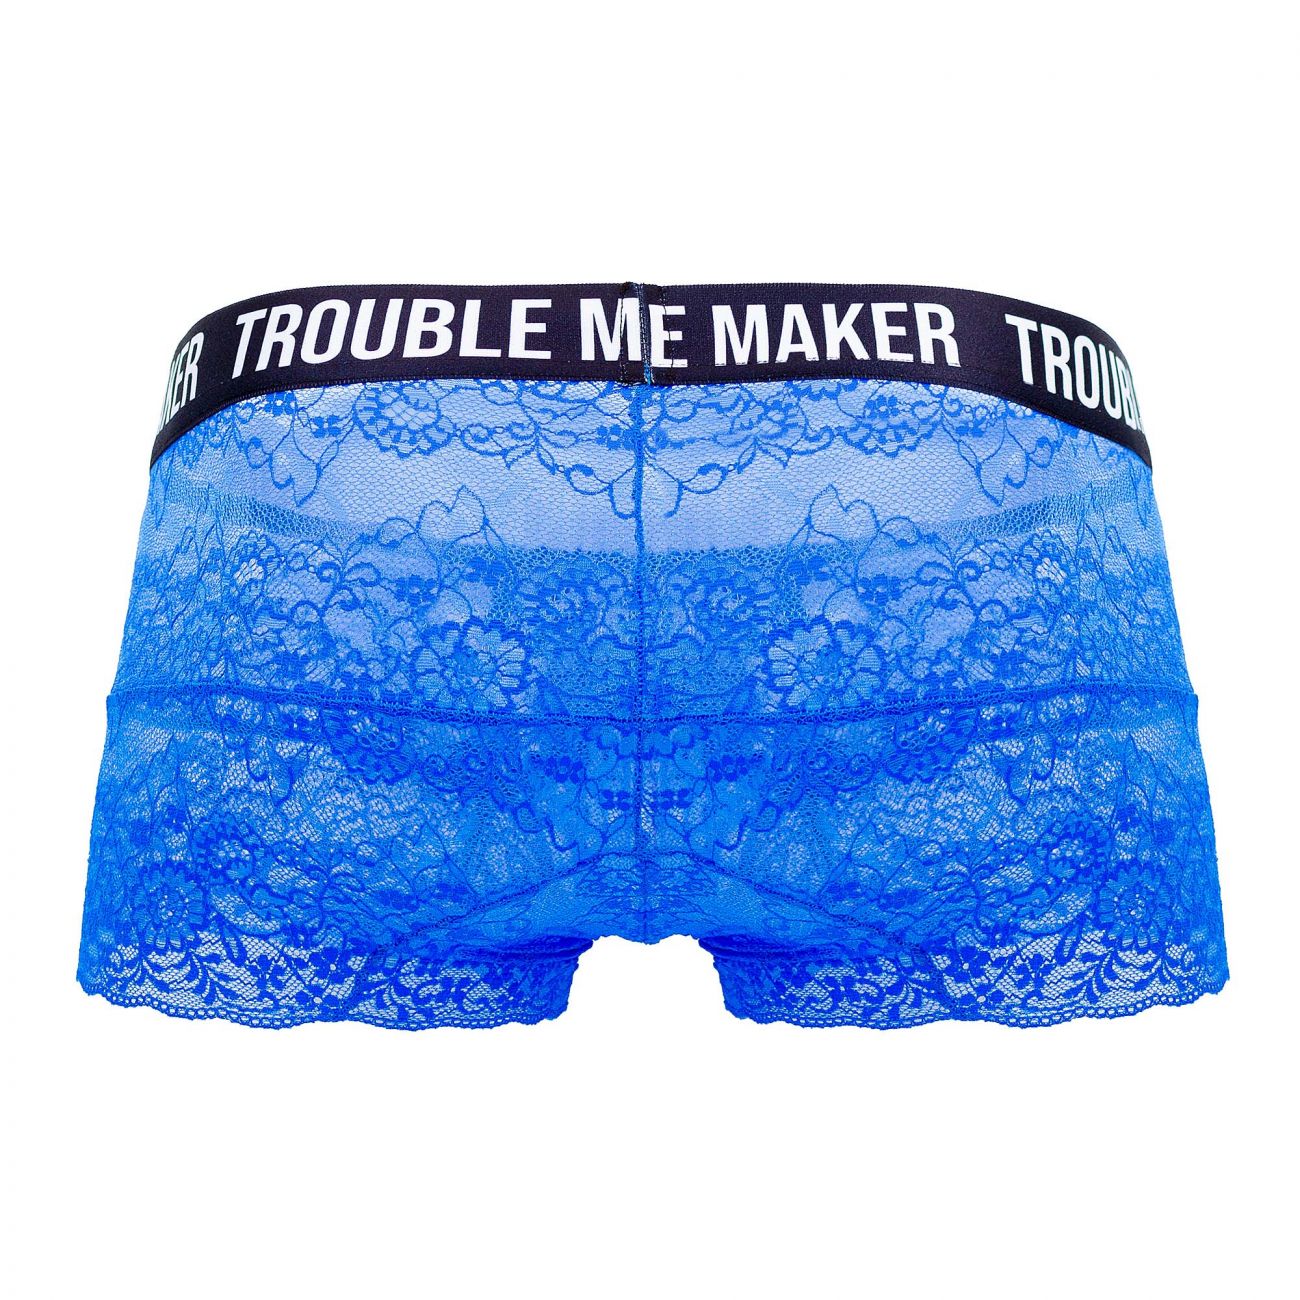 CandyMan 99616 Trouble Maker Lace Trunks Dark Blue